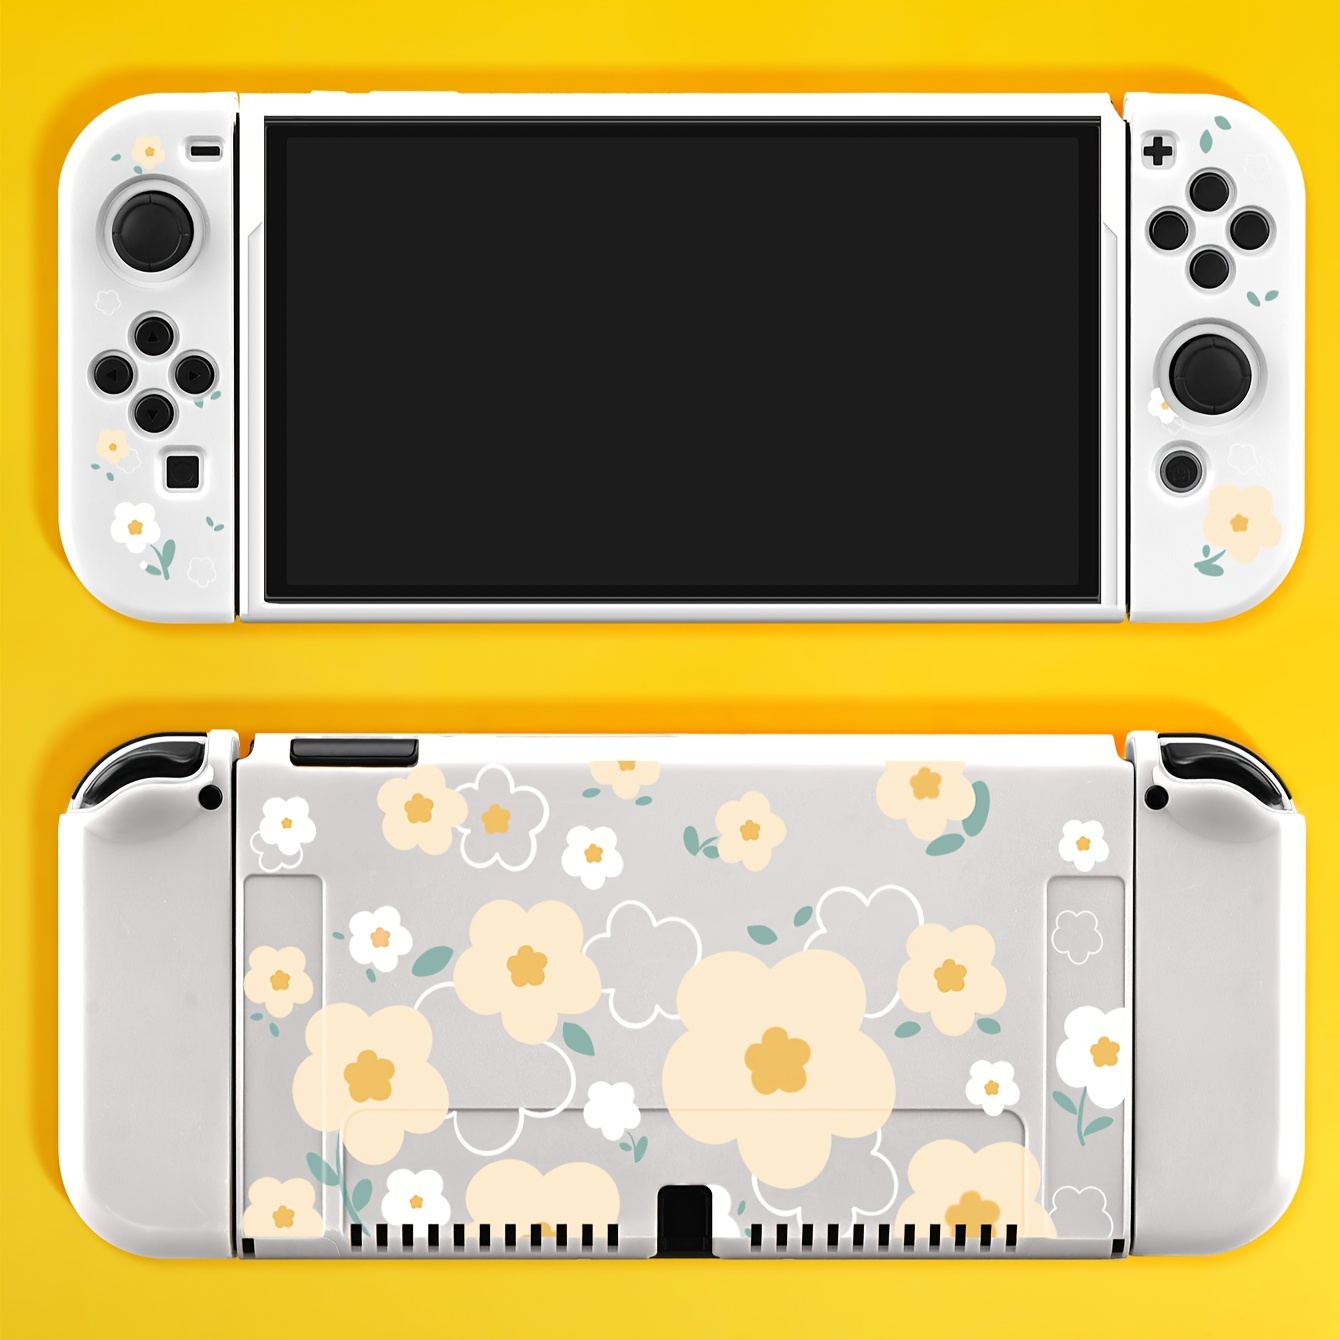 Custom Nintendo Switch Lite Console - Animal Crossing New Horizons